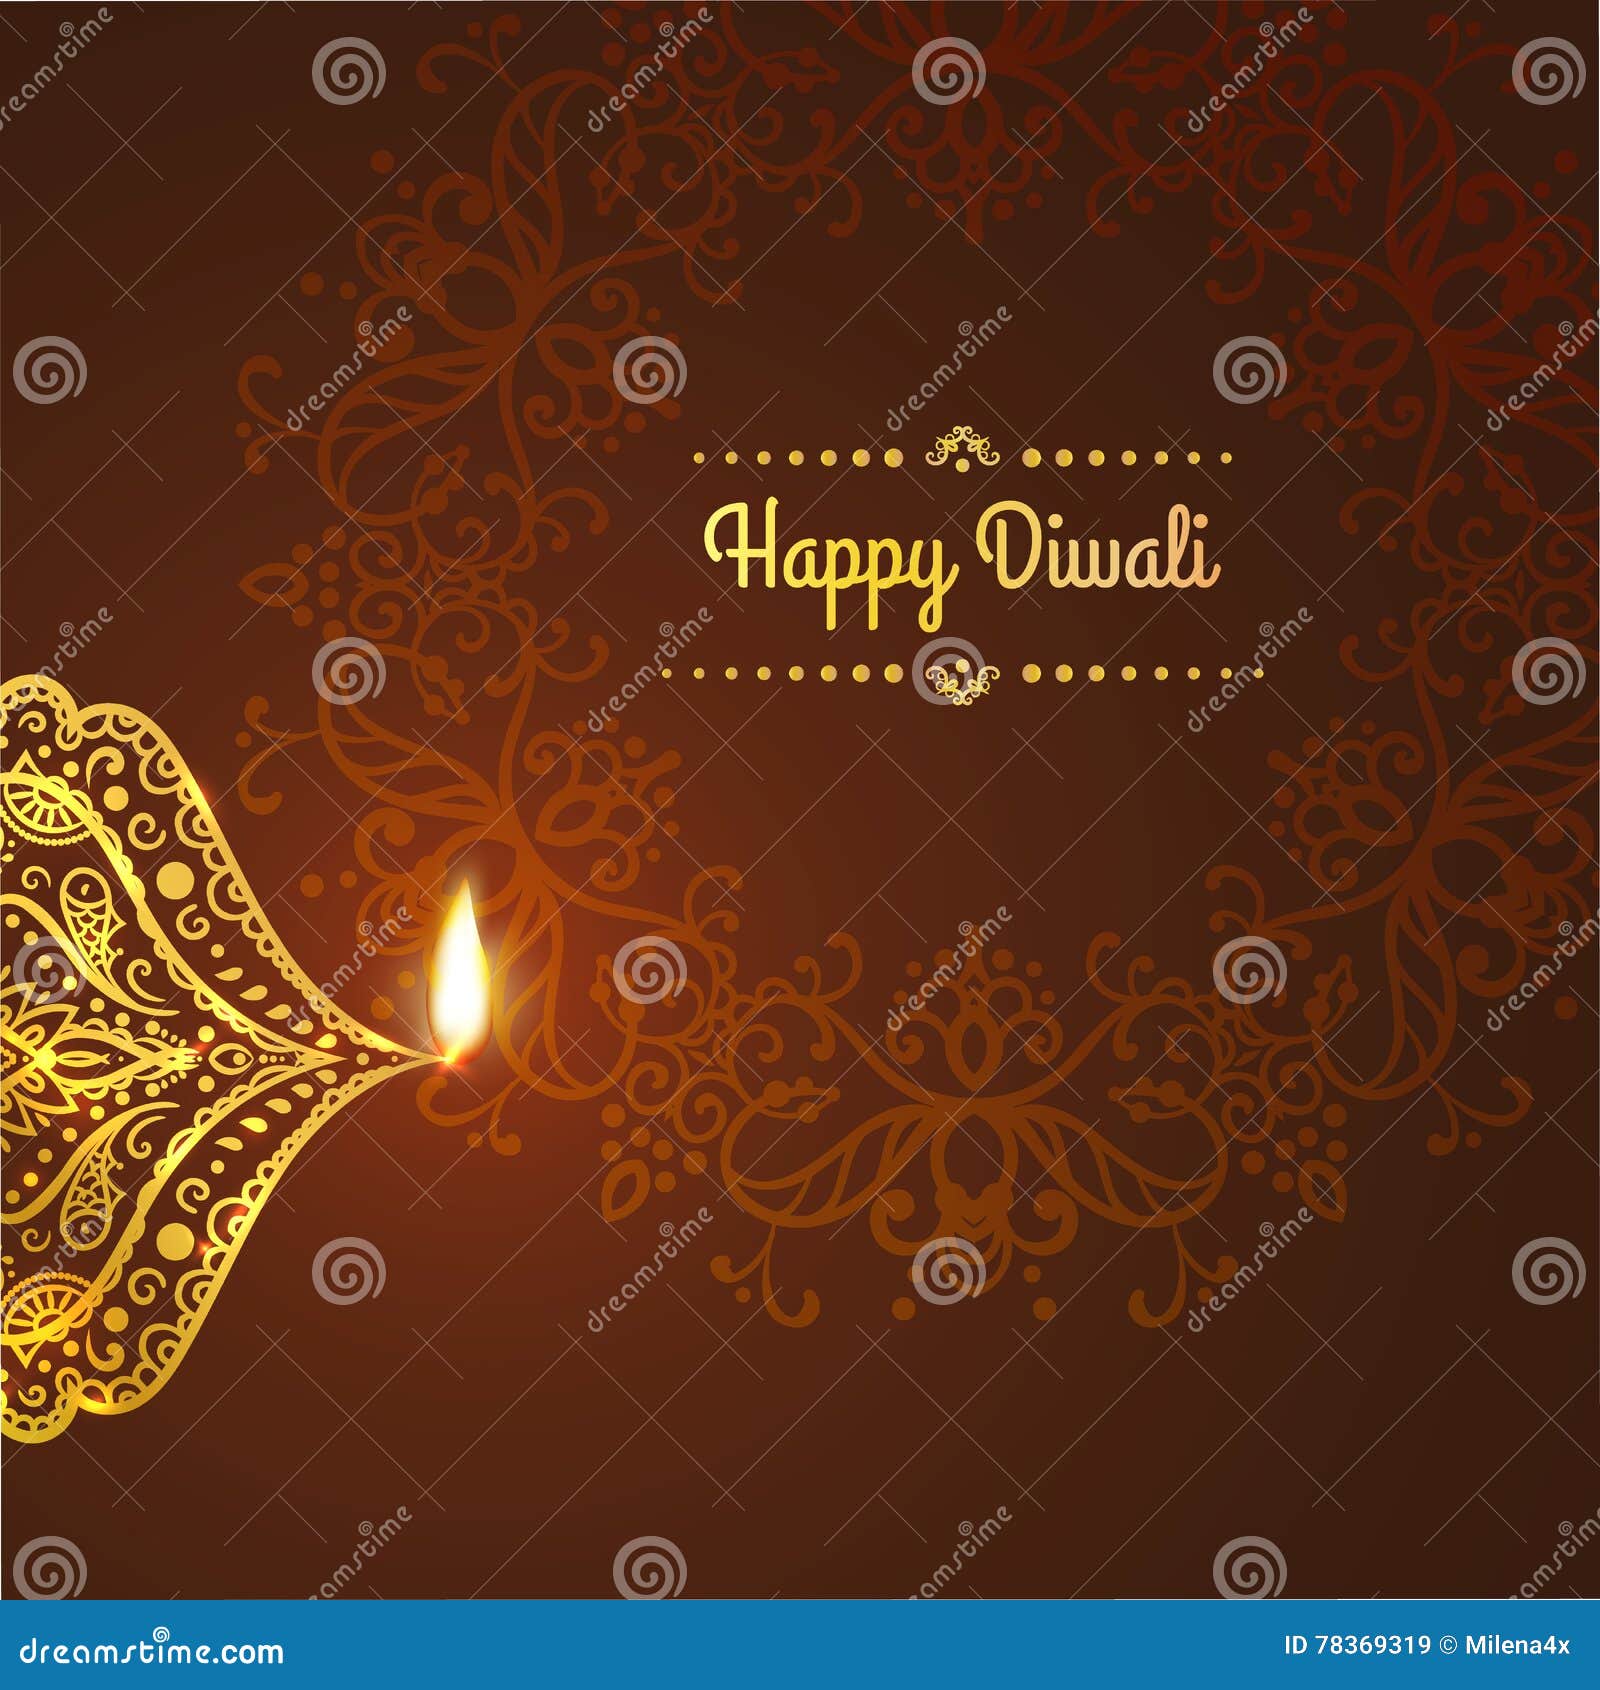 Happy Diwali, . Greeting Card Design for Diwali Festival with ...